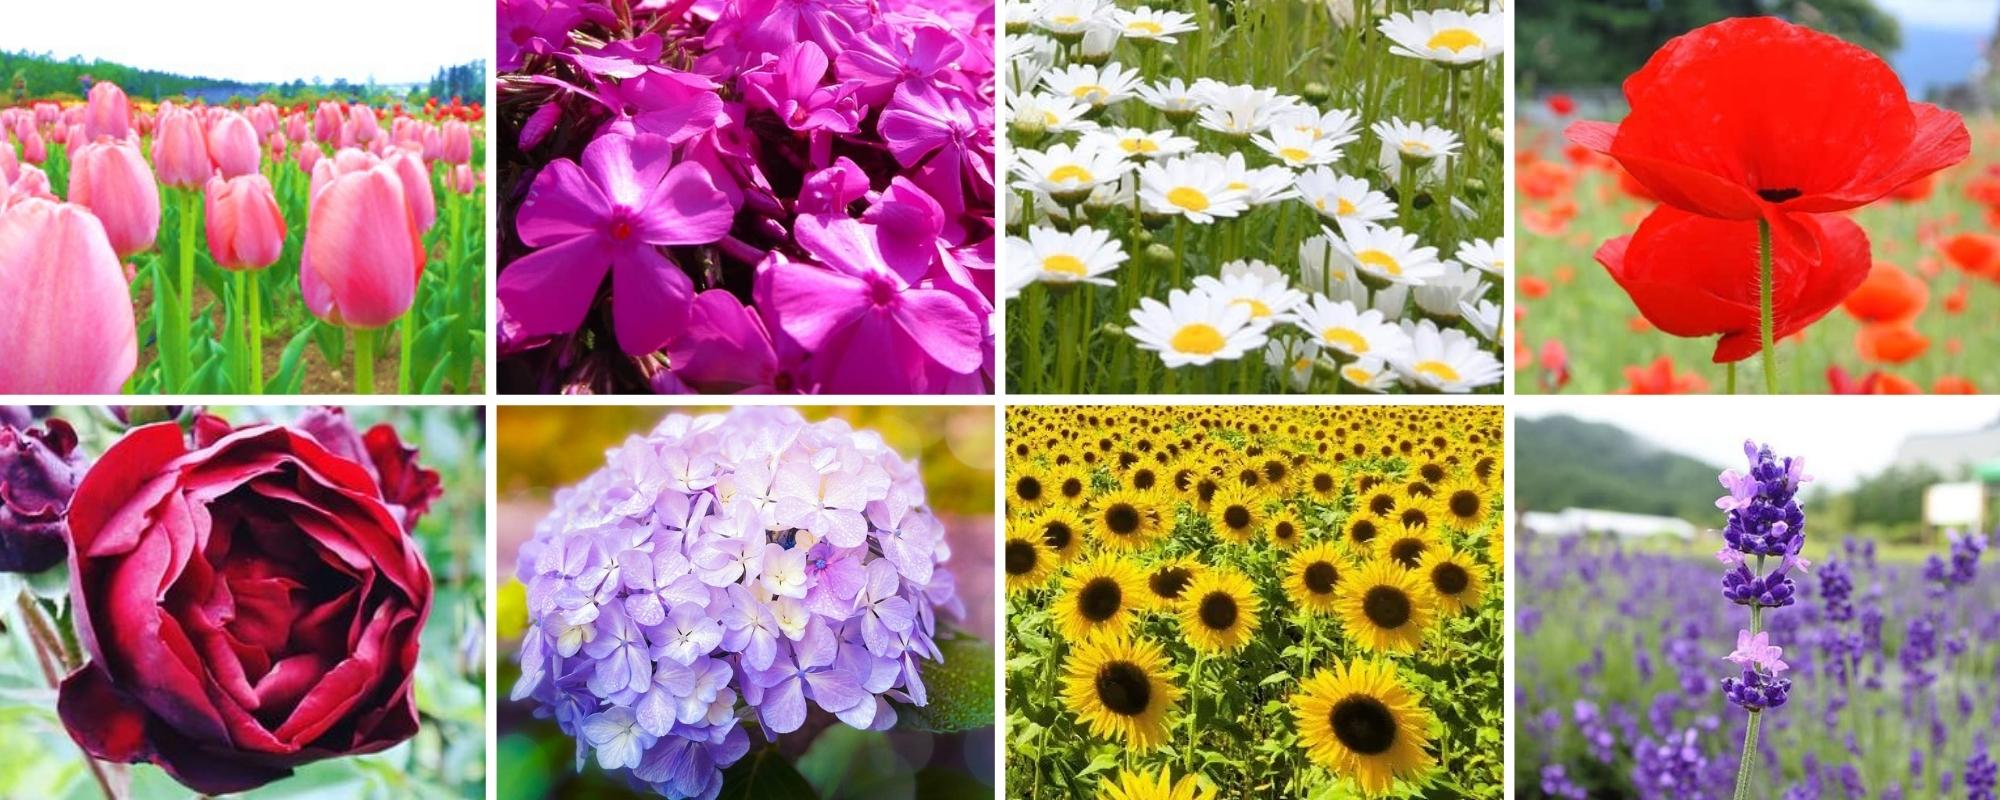 Inawashiro Herb Garden - collage of seasonal flowers